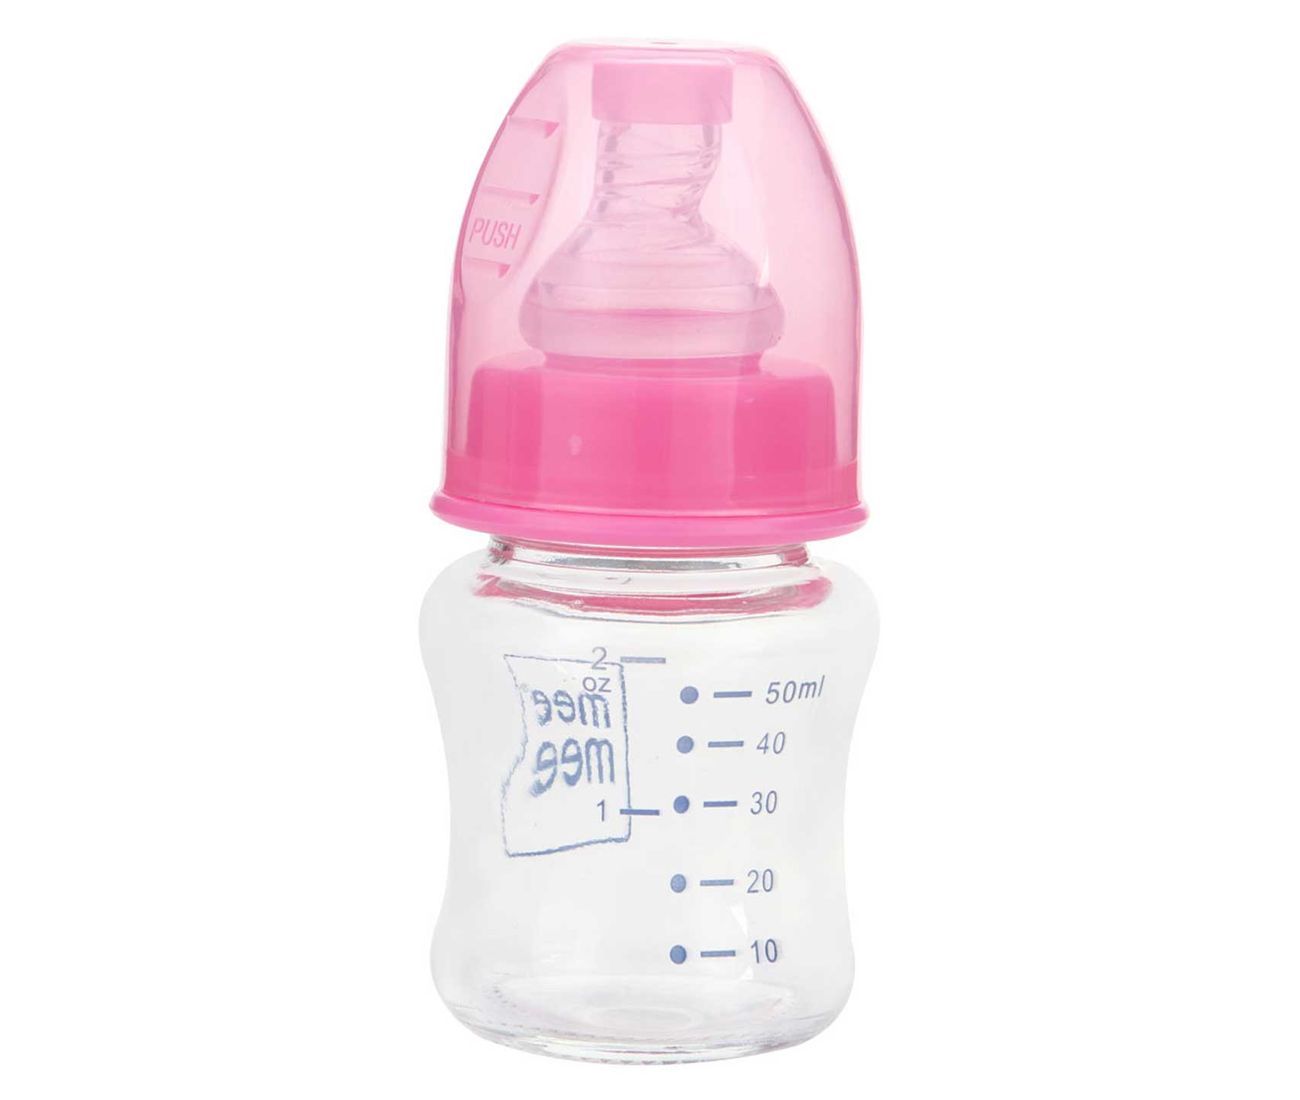 MEE MEE Premium glass feeding bottle for babies